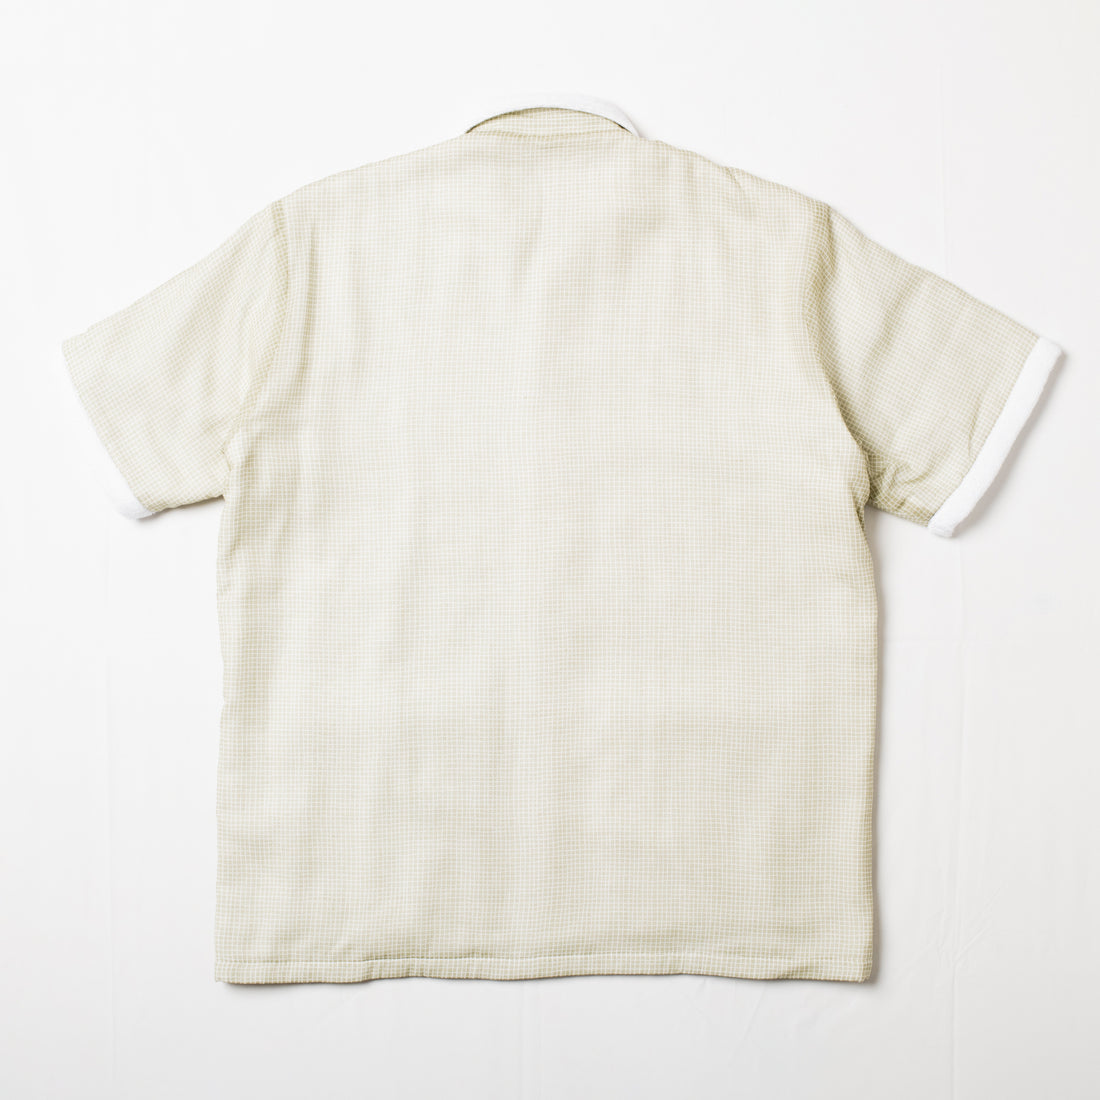 Bryceland's Towel Shirt Mint